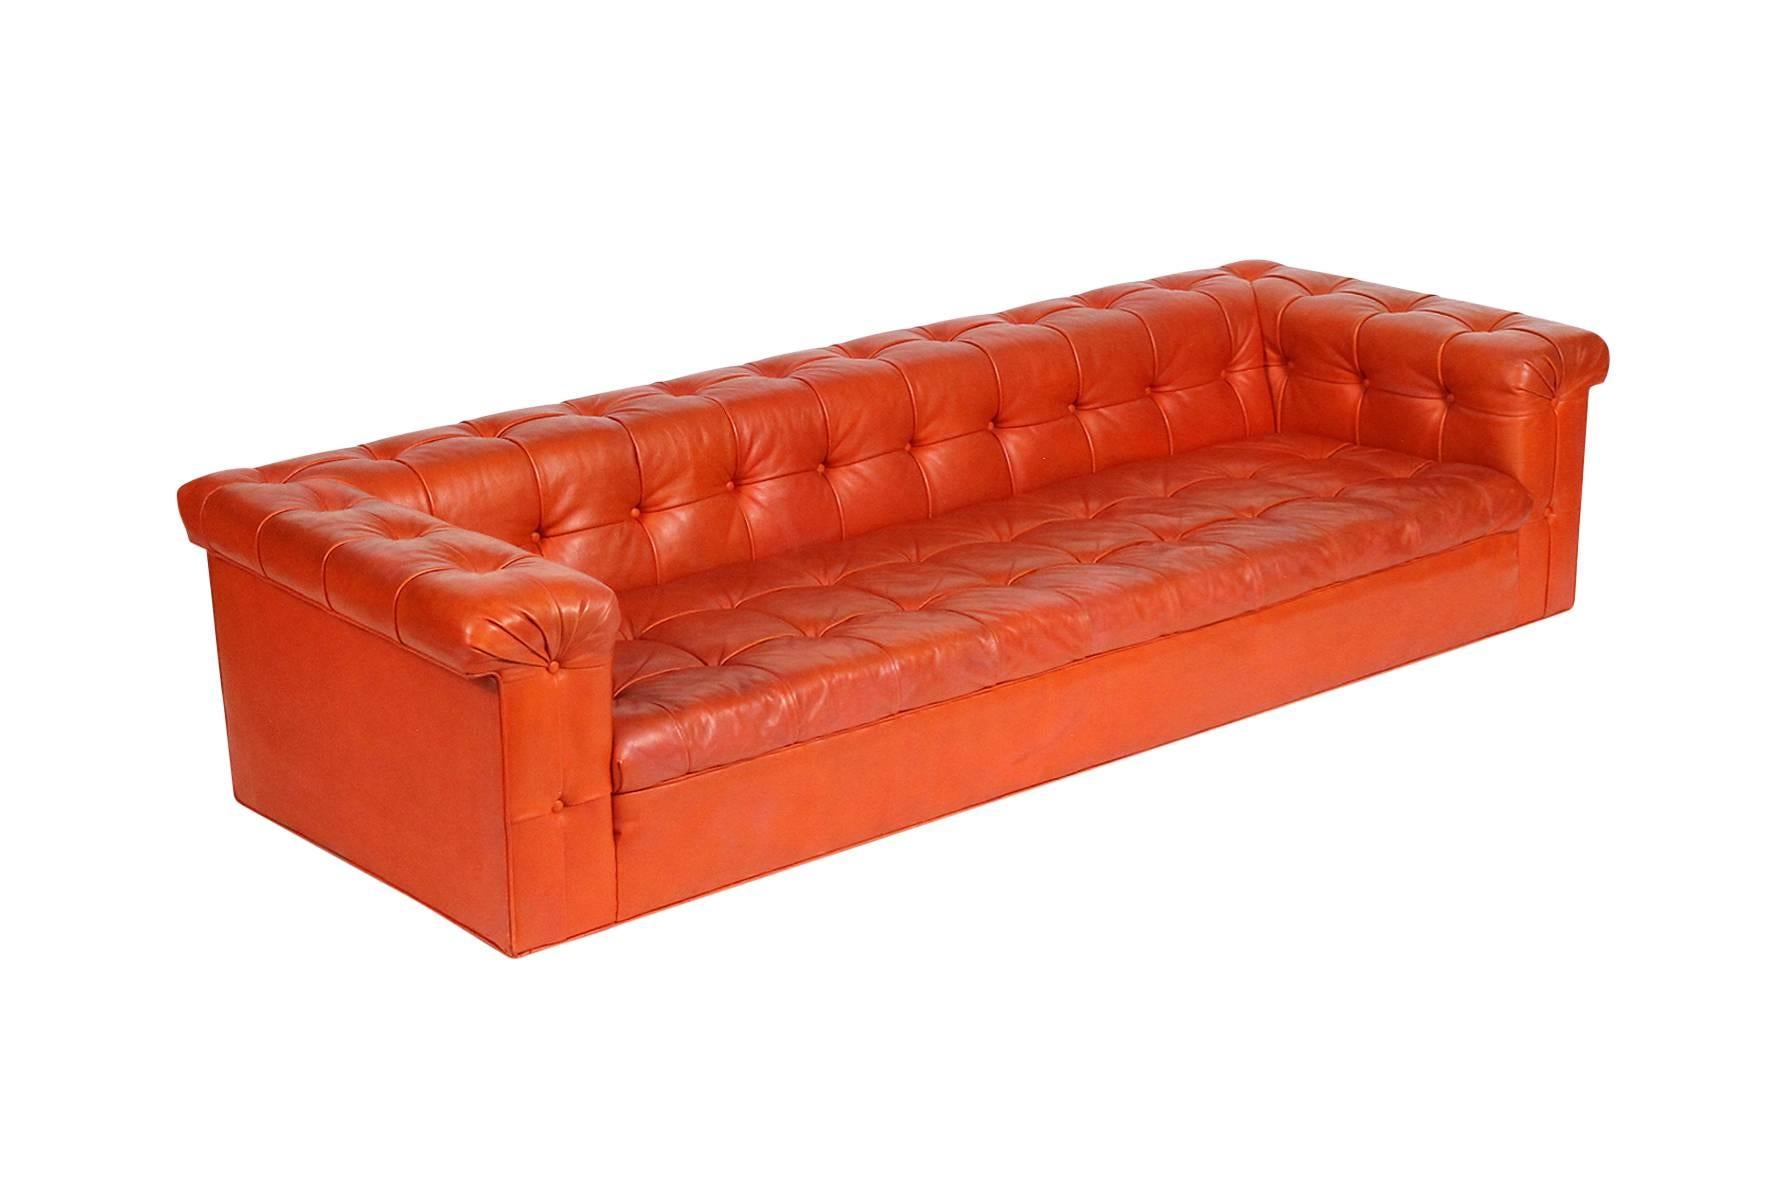 Rare Dunbar party sofa by Edward Wormley in original orange-brown leather.